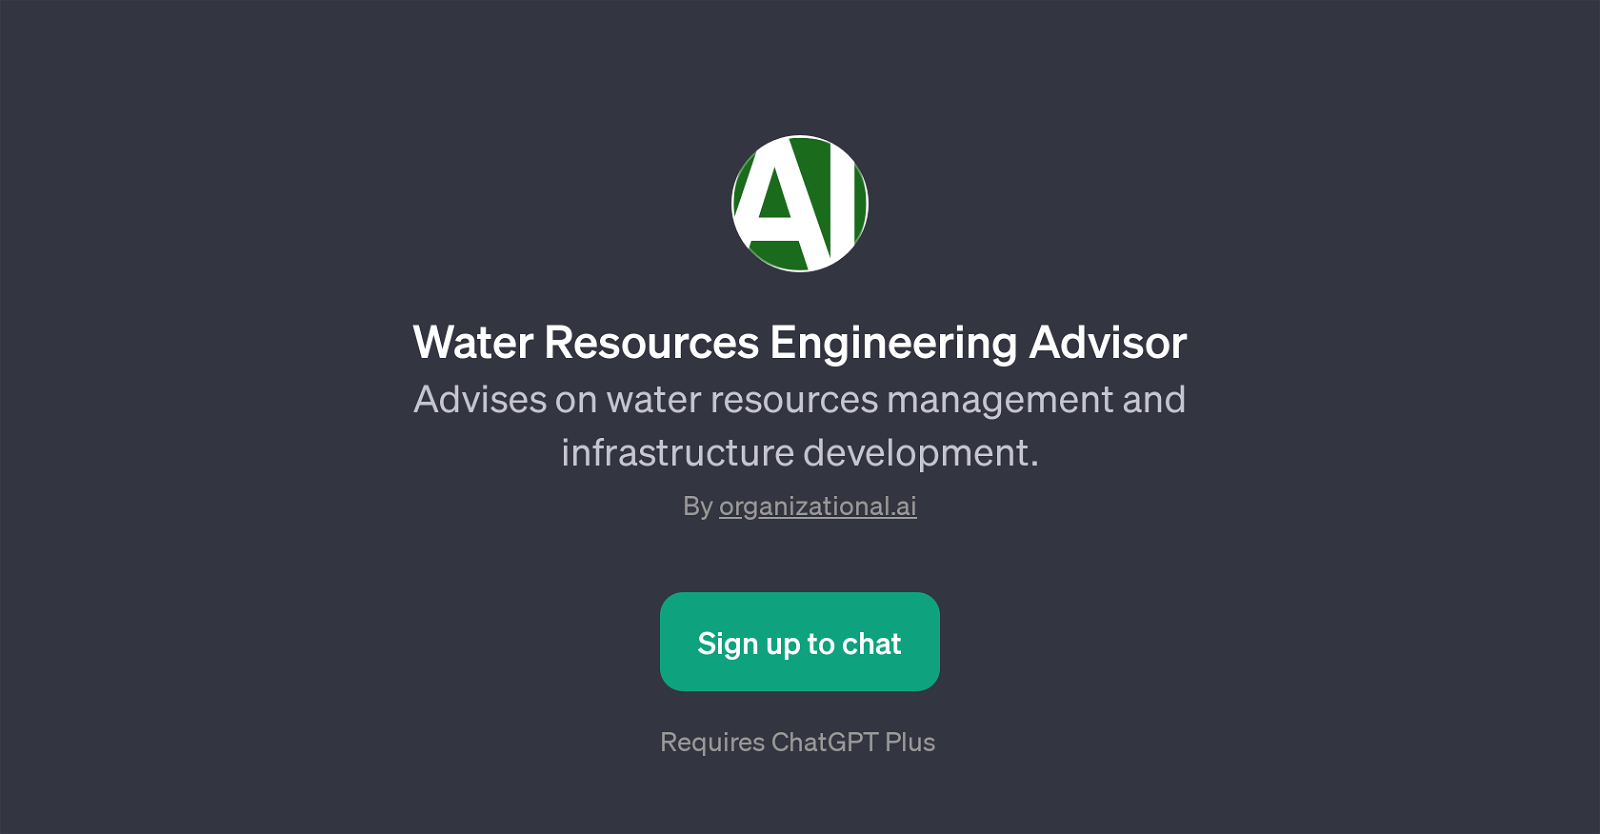 Water Resources Engineering Advisor website